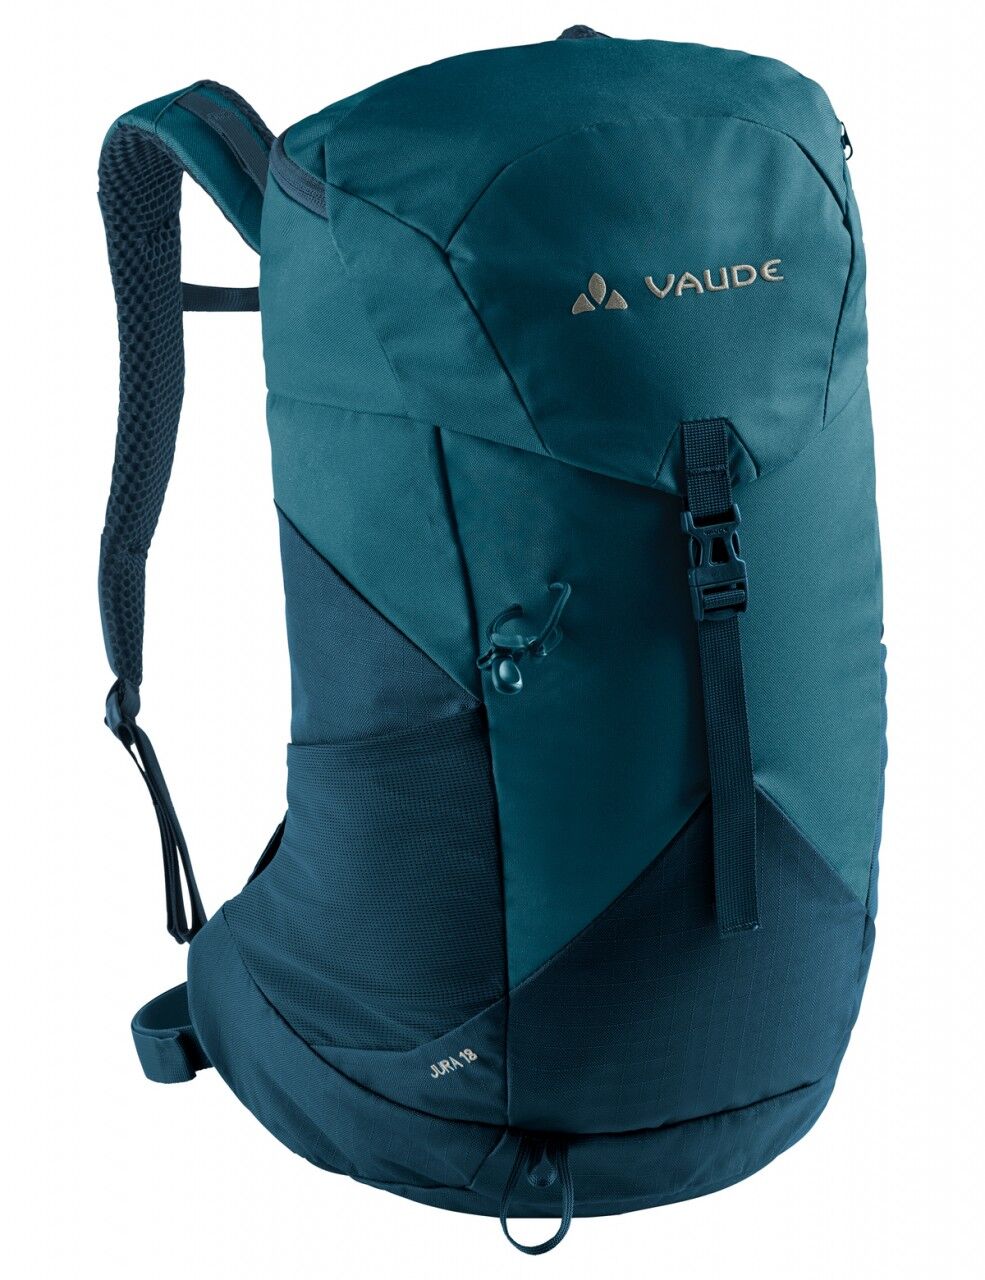 Vaude Jura 18 - Hiking backpack